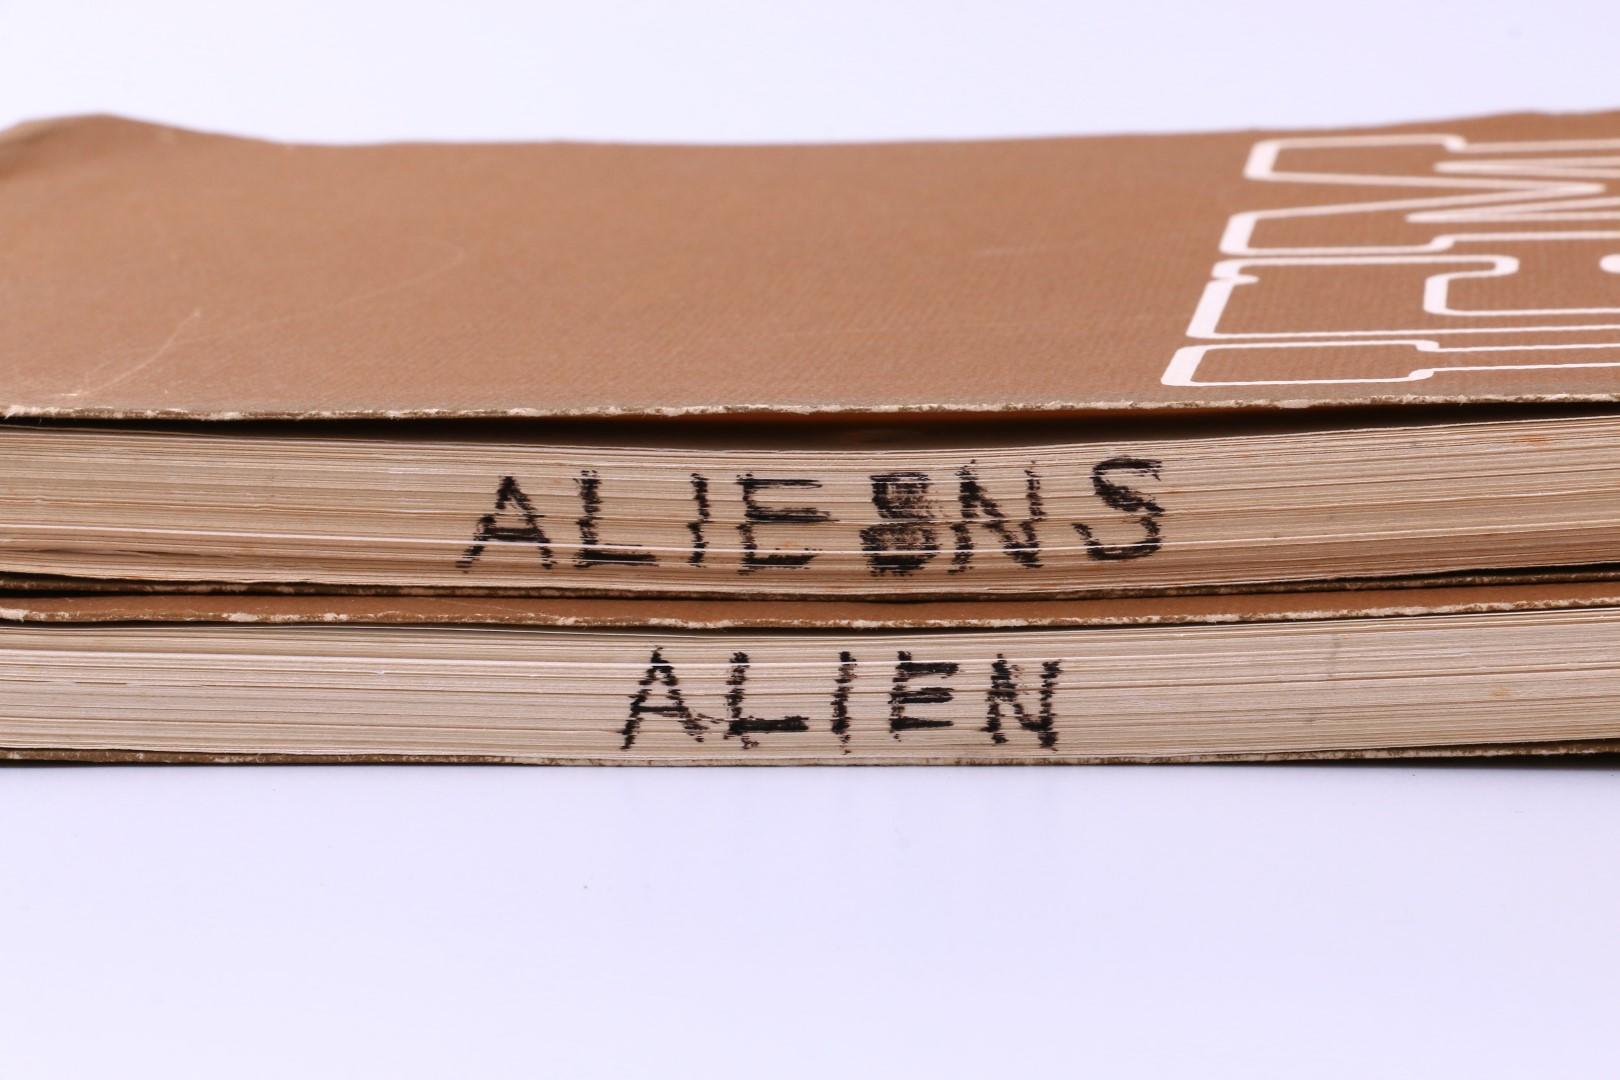 Walter Hill, David Giler w/ James Cameron - Alien Script w/ Aliens - Brandywine Productions, 1979-1985, Manuscript.